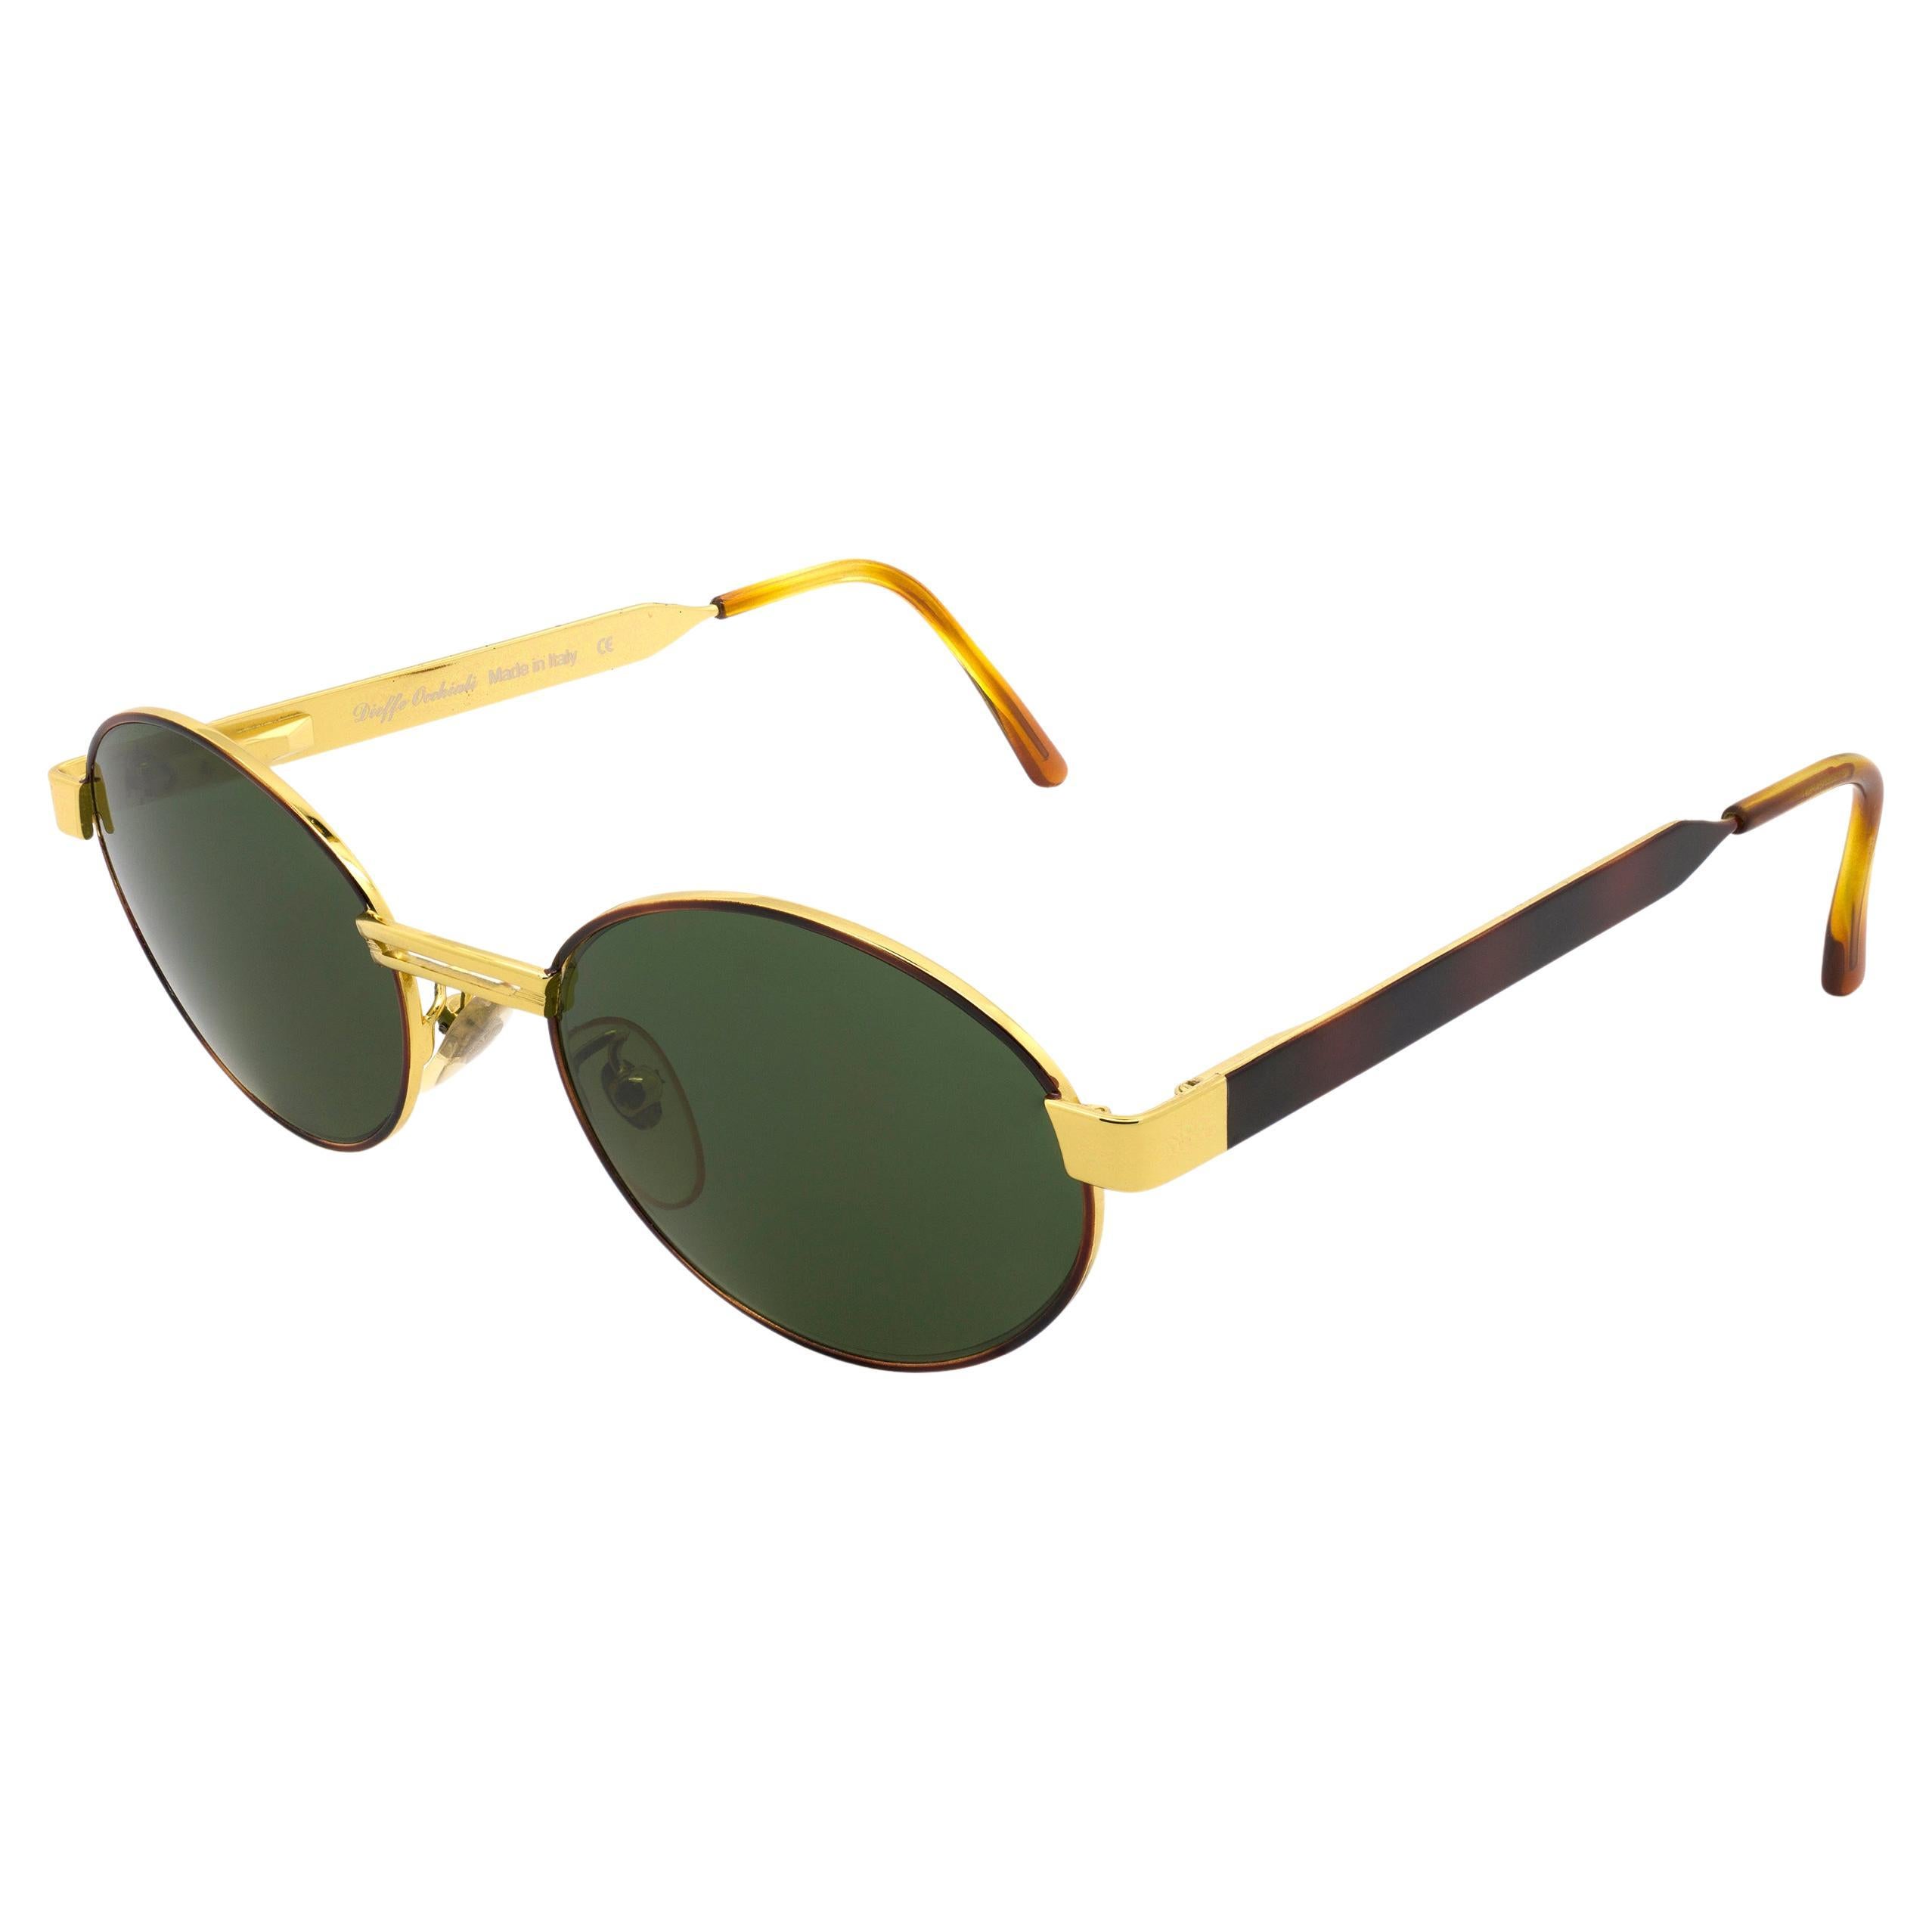 Top Gun vintage sunglasses